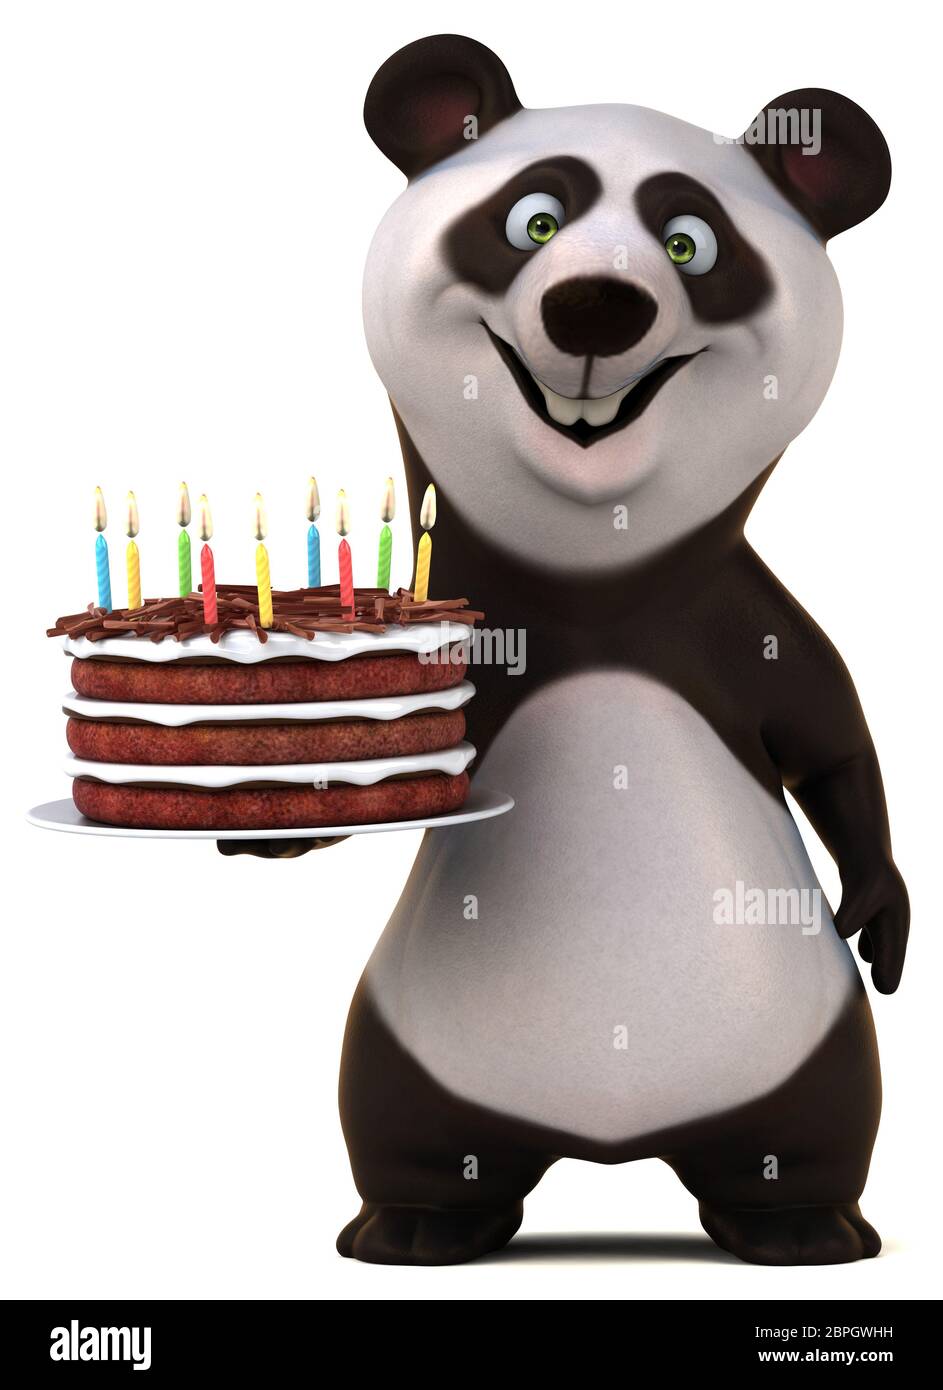 Panda cake with cream Stock Photos, Royalty Free Panda cake with cream  Images | Depositphotos